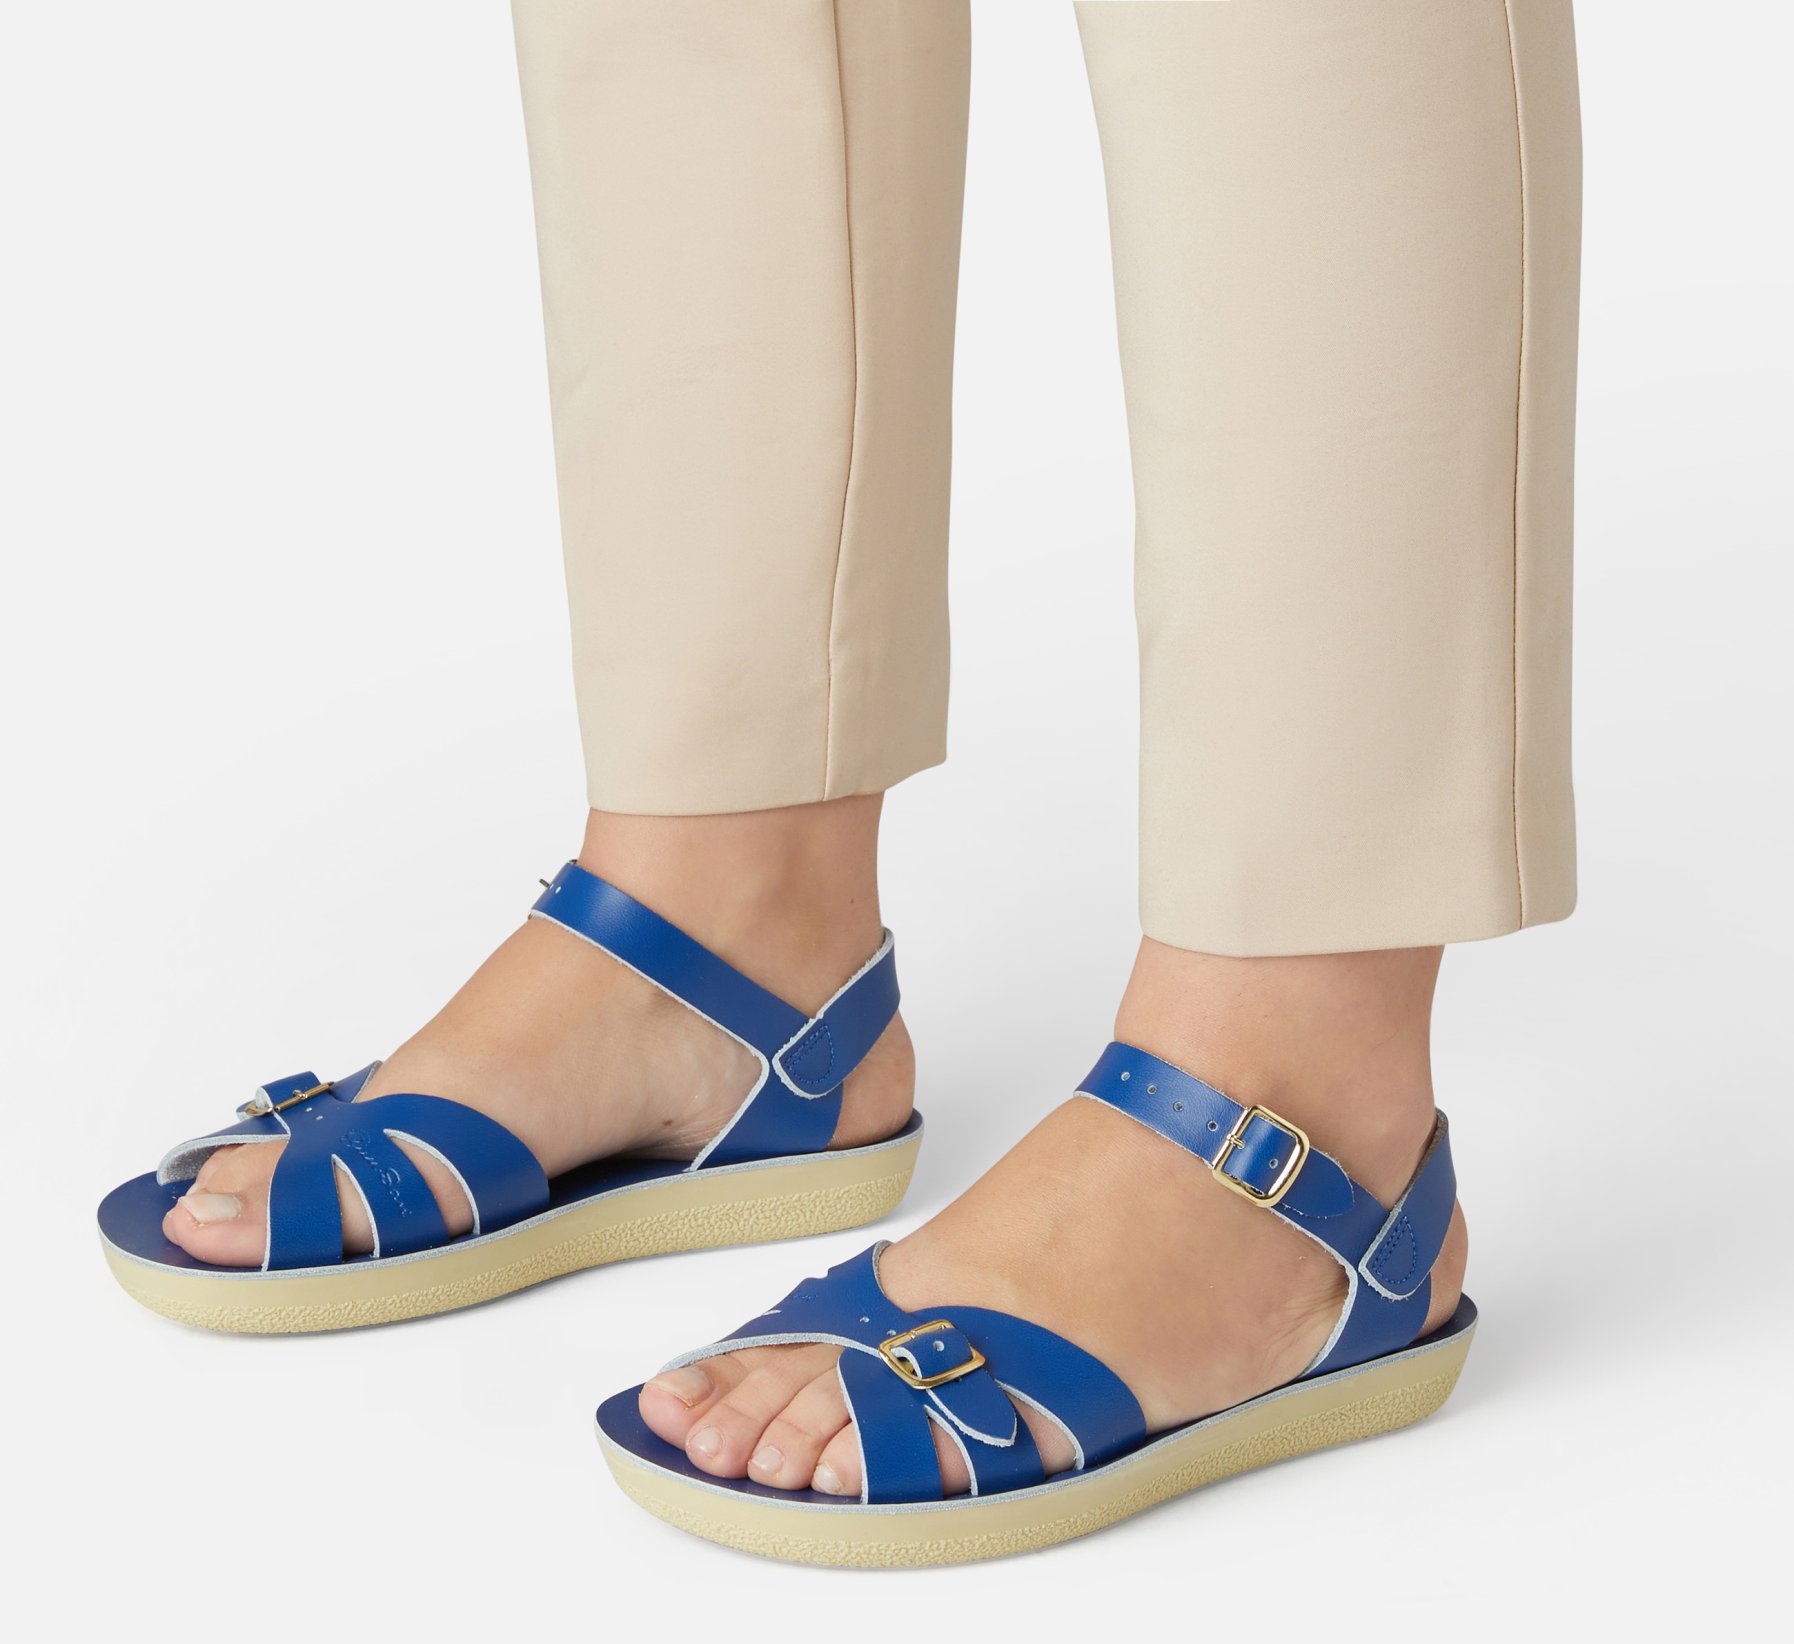 Boardwalk Cobalt Sandal - Salt Water Sandals